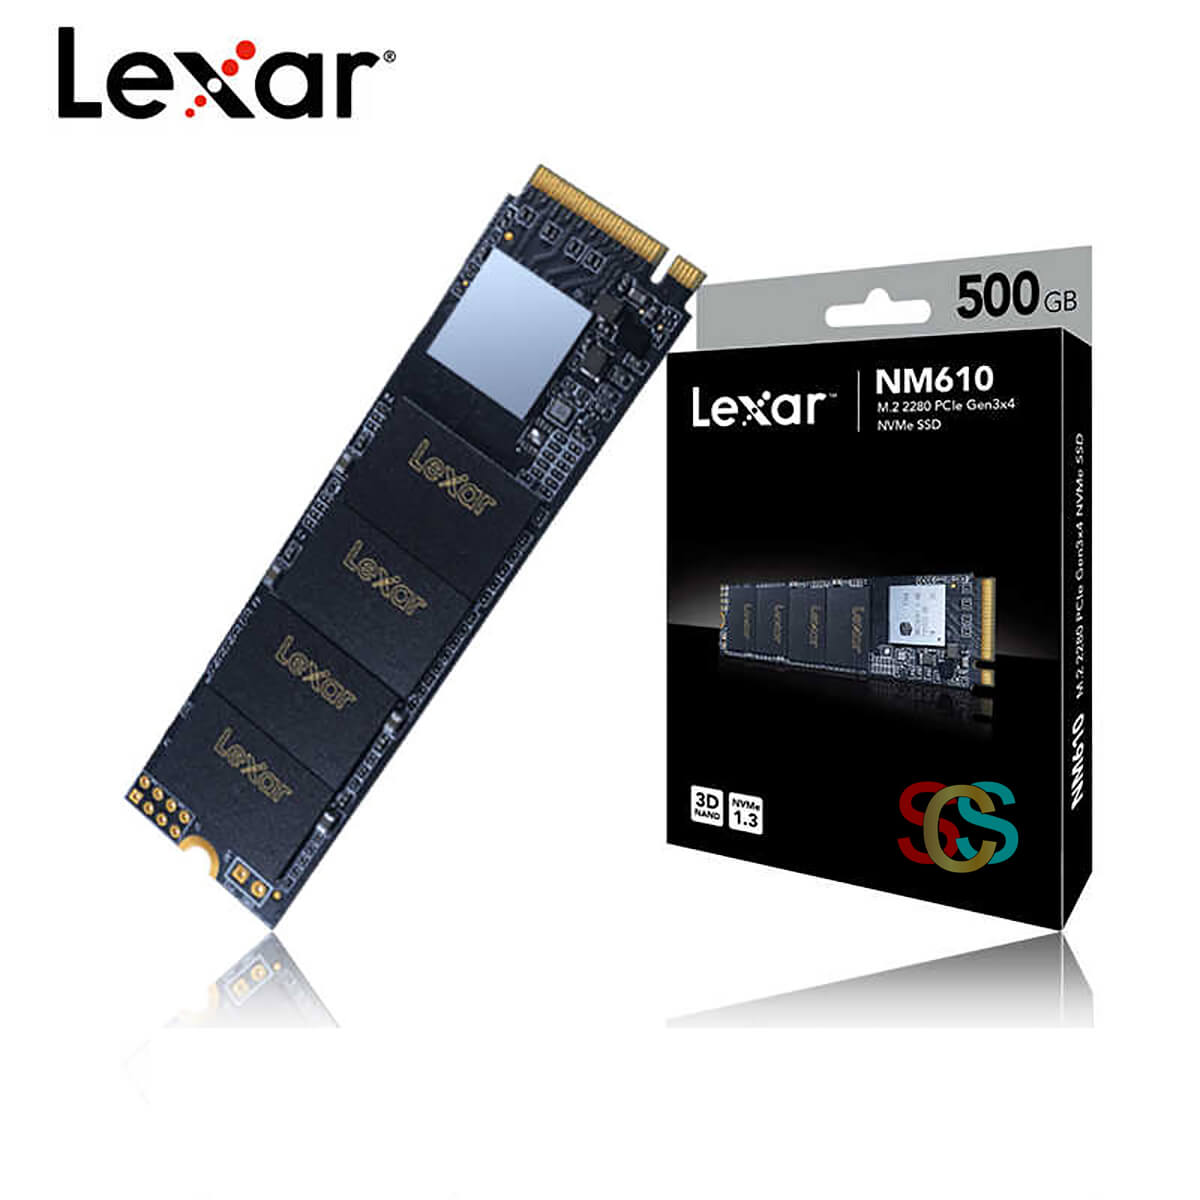 Lexar NM610 NVMe 500GB M.2 2280 PCIe Gen3x4 SSD Driv